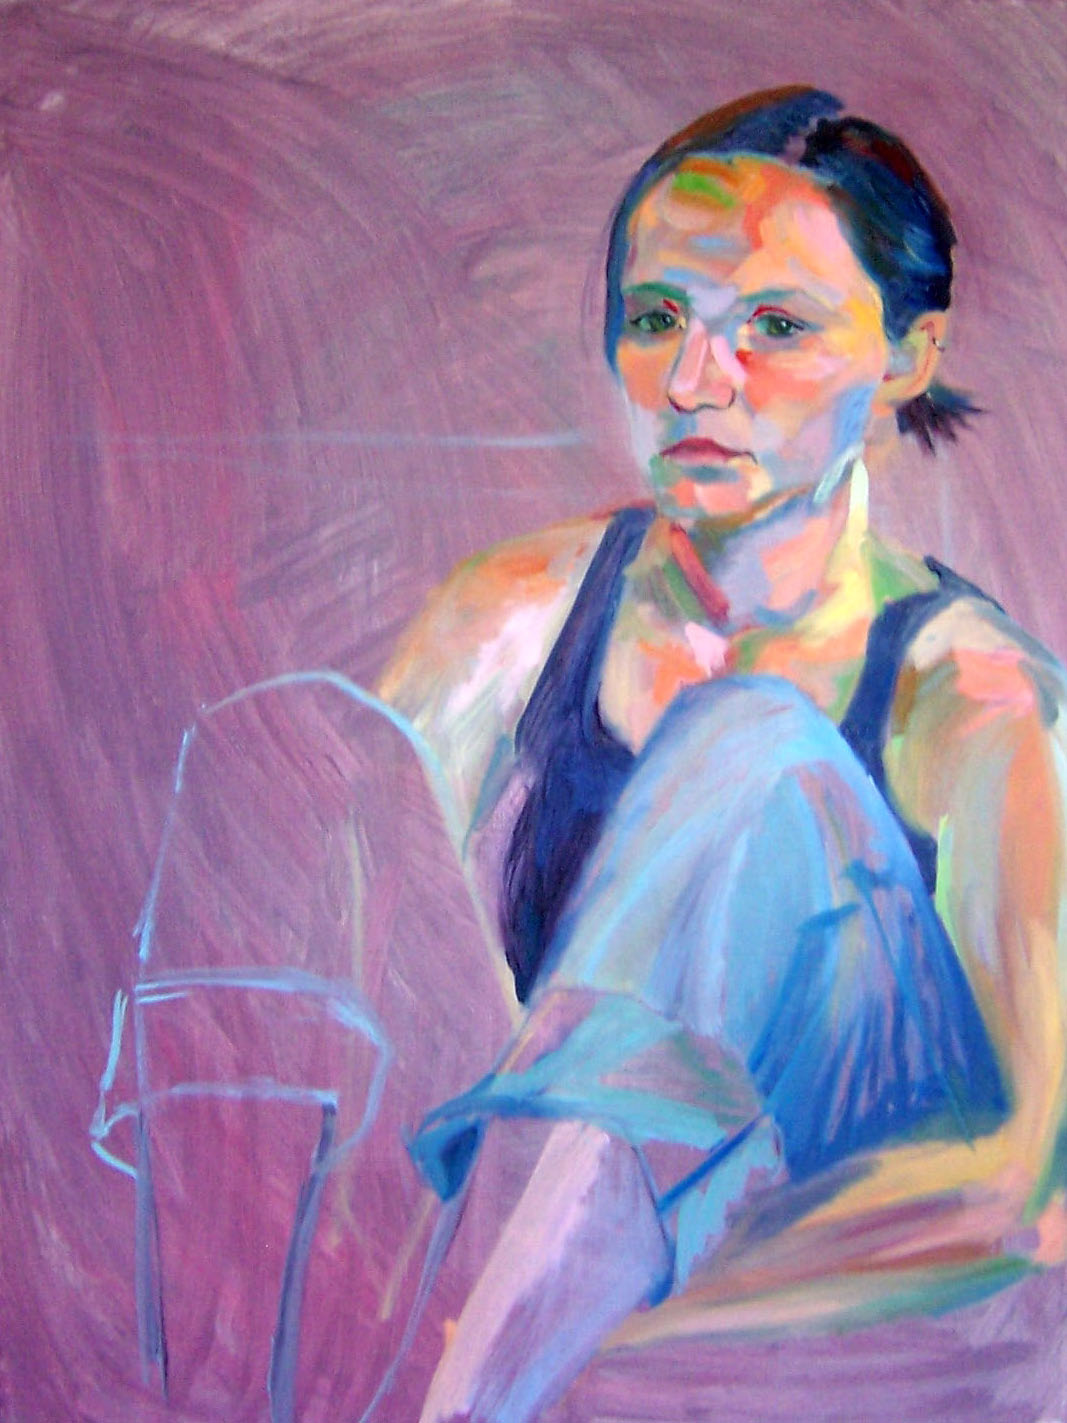  Oil on canvas, 18x24”  2007. 